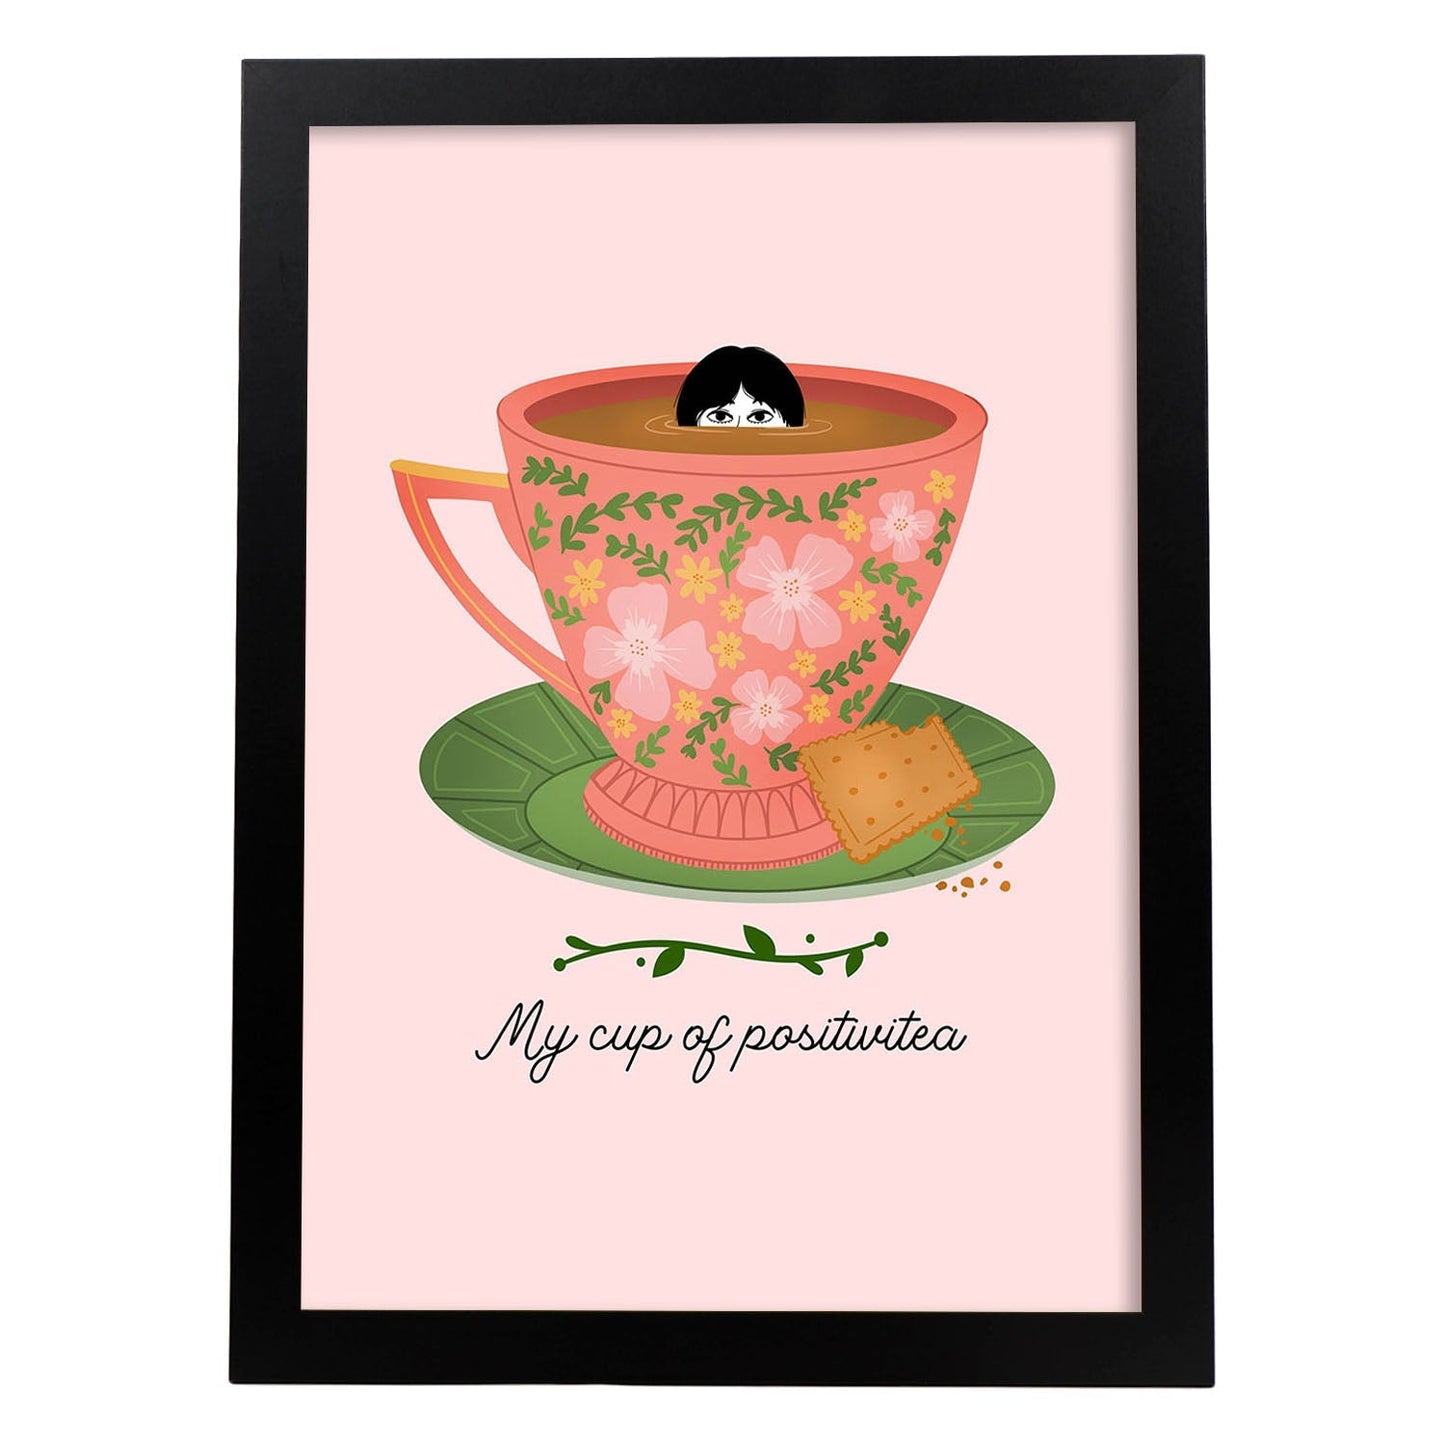 Set de láminas Té positivo. Pósters con ilustraciones para amantes del té y el café.-Artwork-Nacnic-A4-Marco Negro-Nacnic Estudio SL